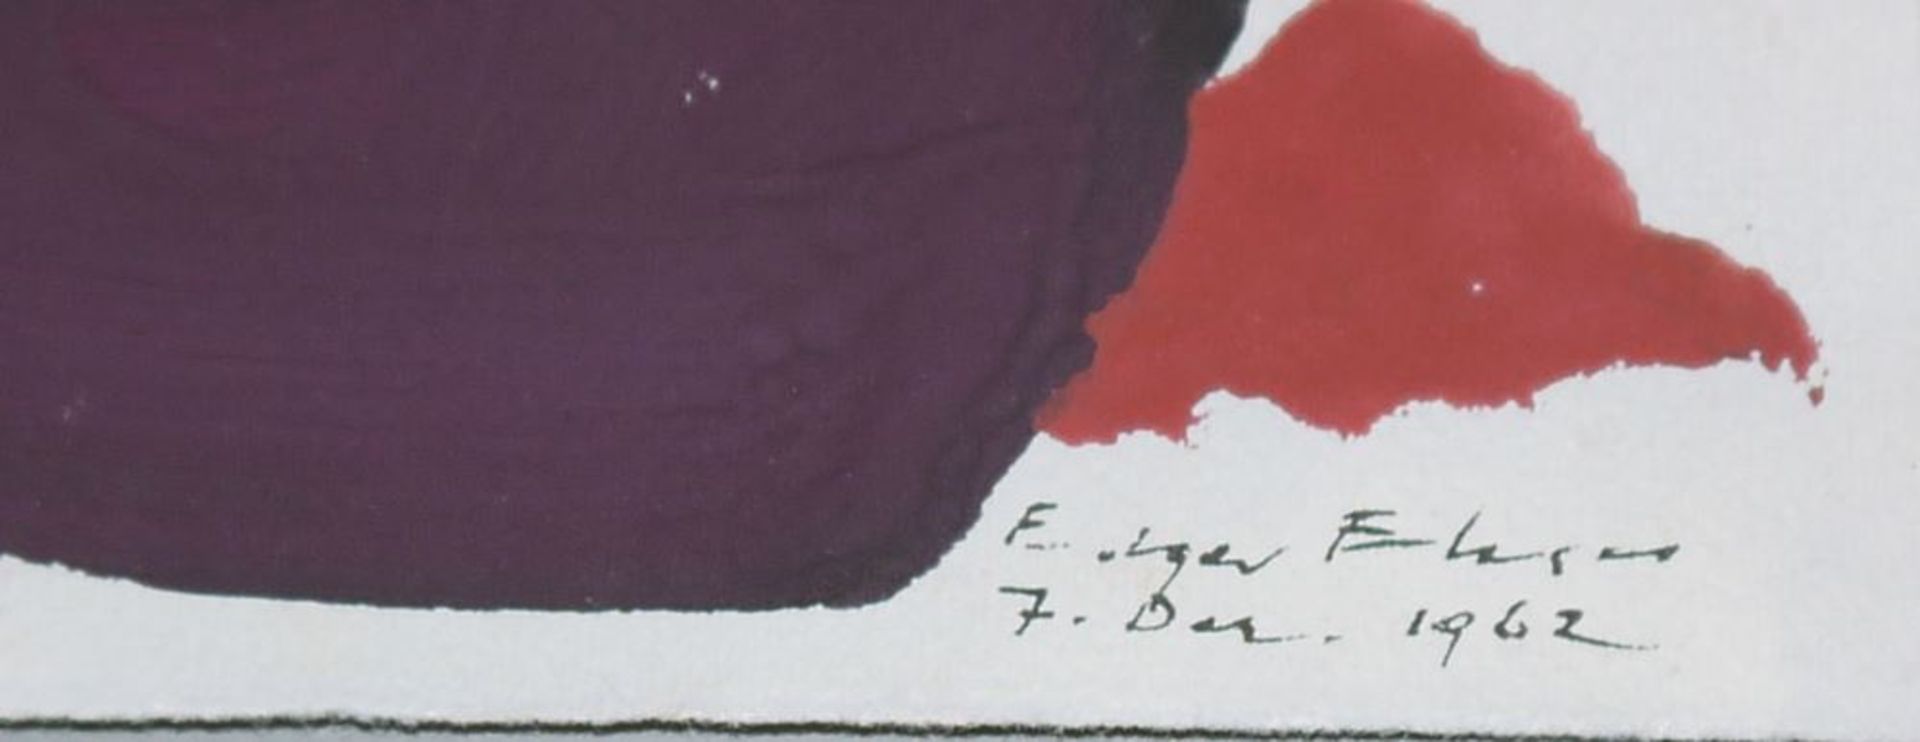 Edgar Ehses, Abstrakte Komposition, signiertes Aquarell von 1962 - Image 2 of 3